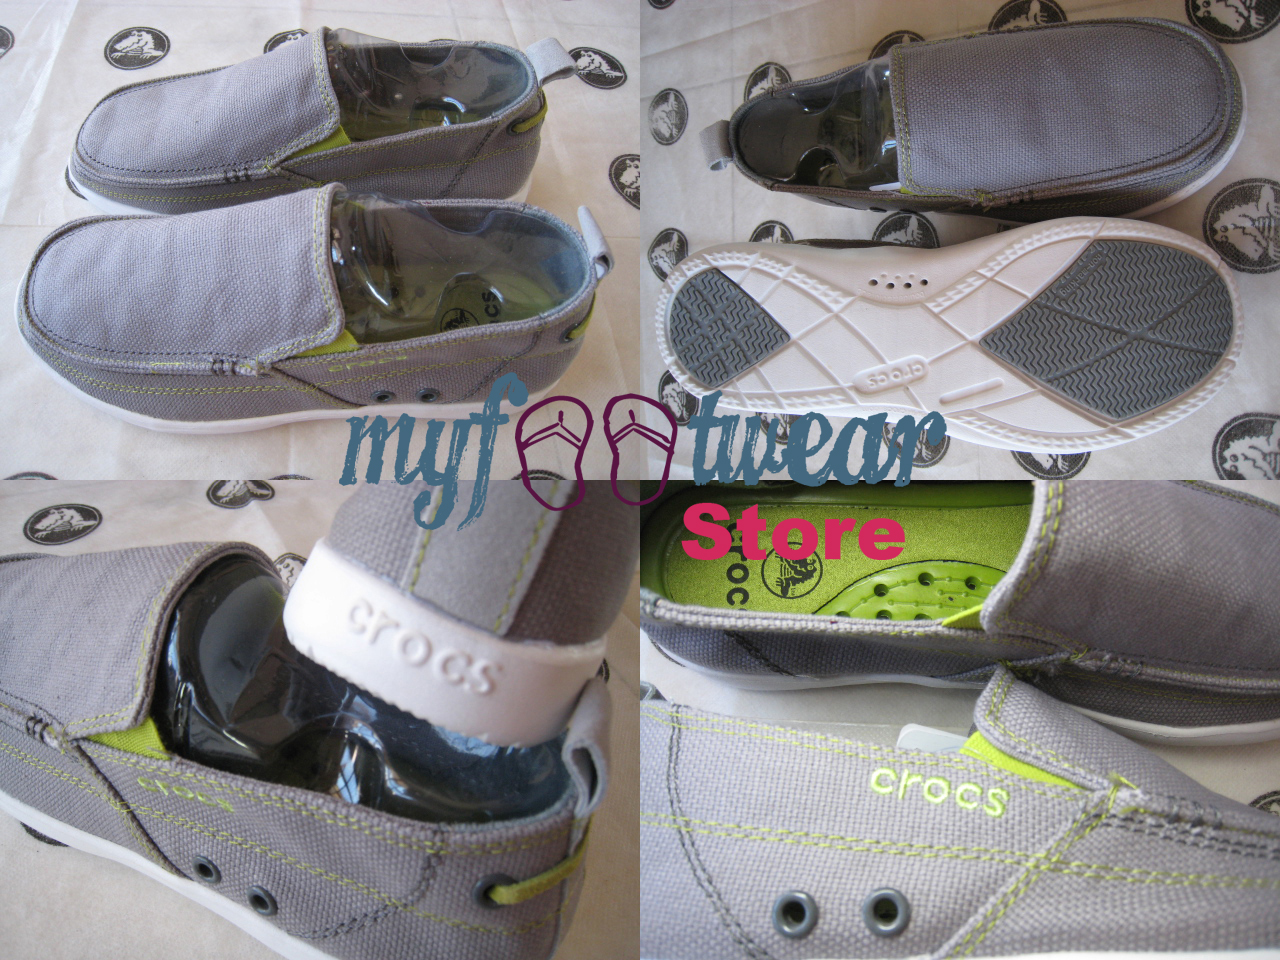 MyFootWearStore - Pusat Sepatu Crocs Murah Surabaya: Walu Men